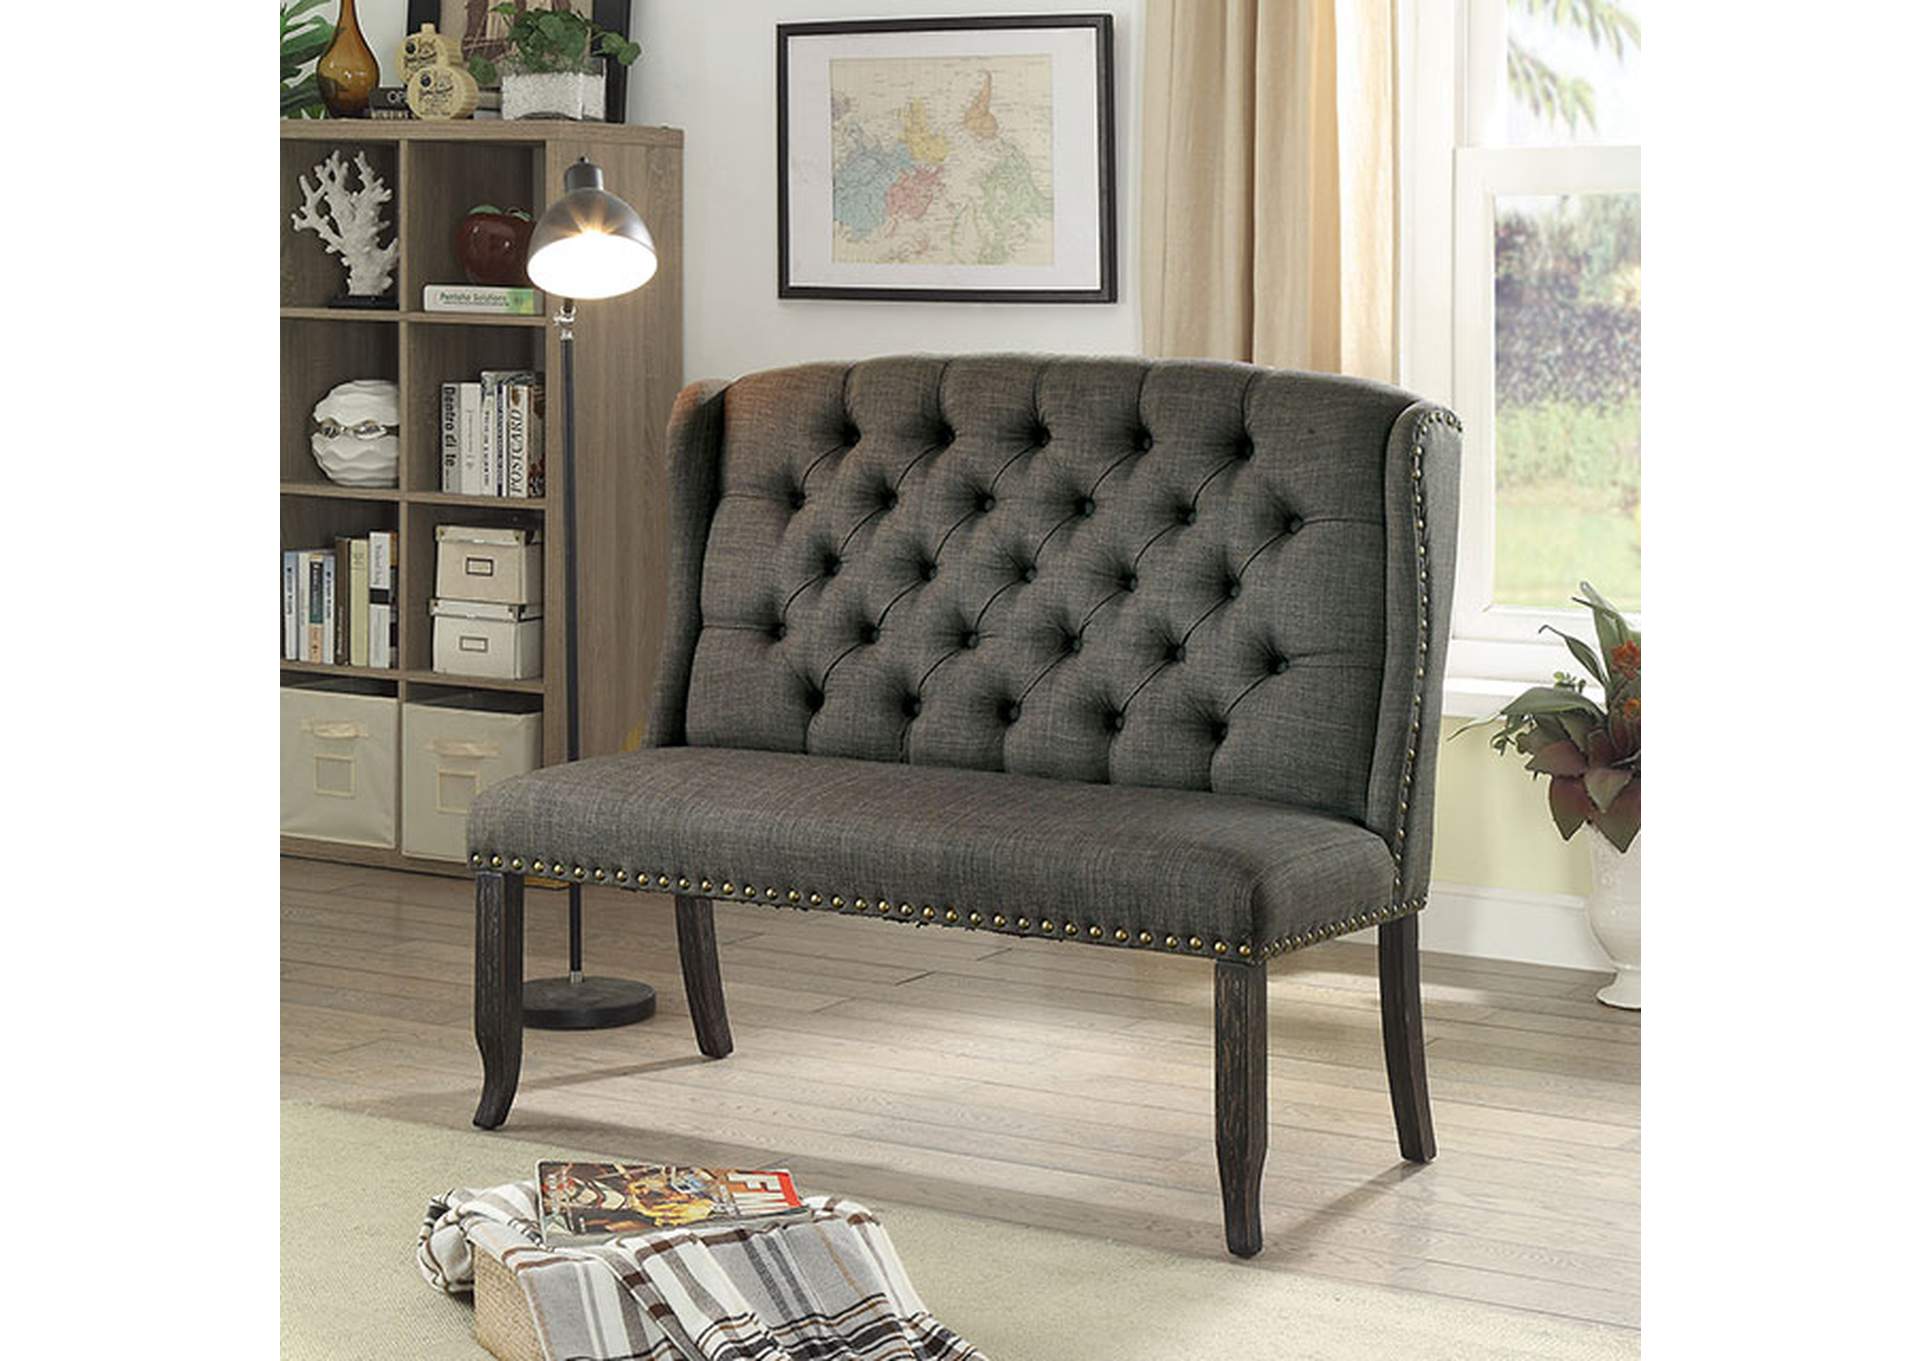 Sania Antique Black 2-Seater Loveseat Bench,Furniture of America